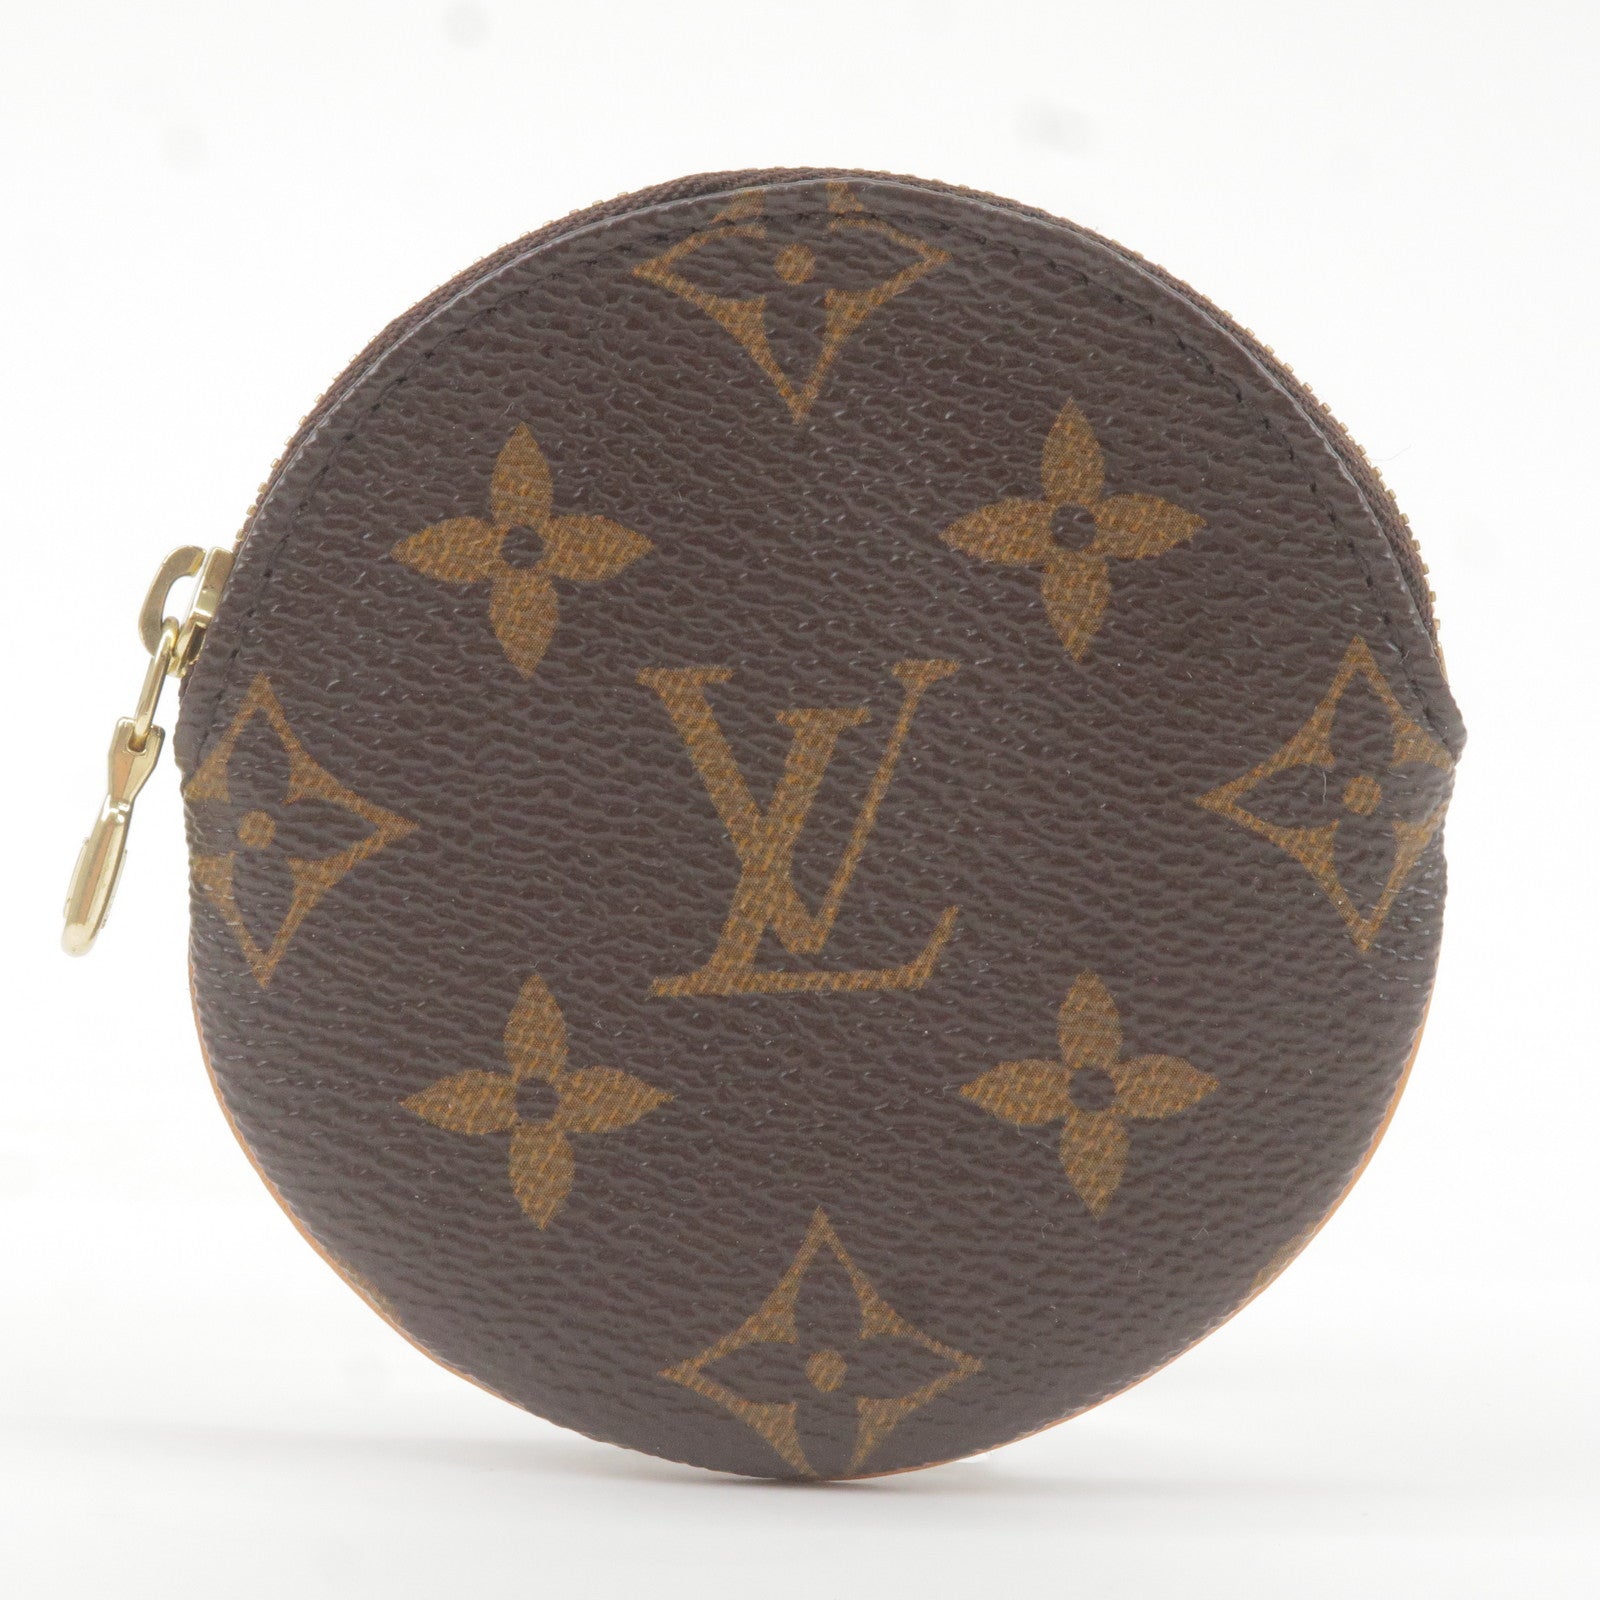 Louis Vuitton Porte Cles Rond Trunks & Bags Bag Charm Key Chain